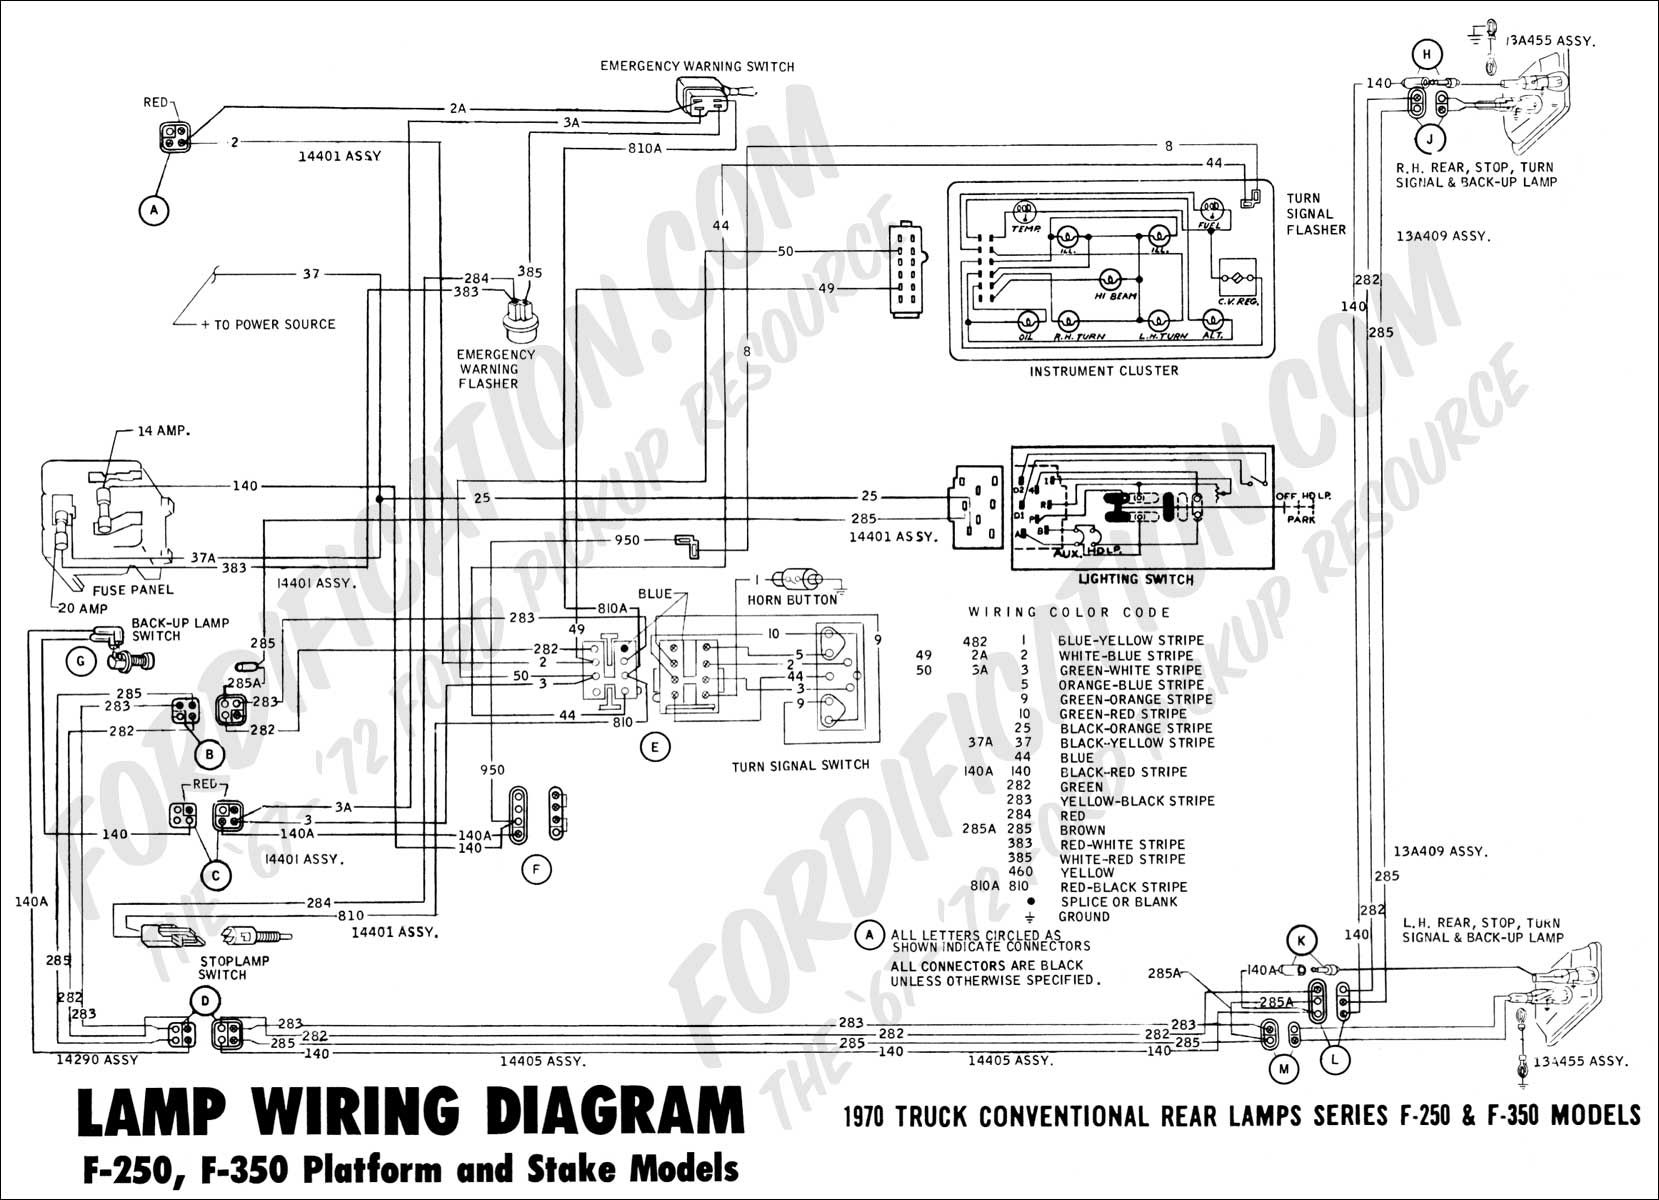 bmw x5 suv tail light wiring diagram